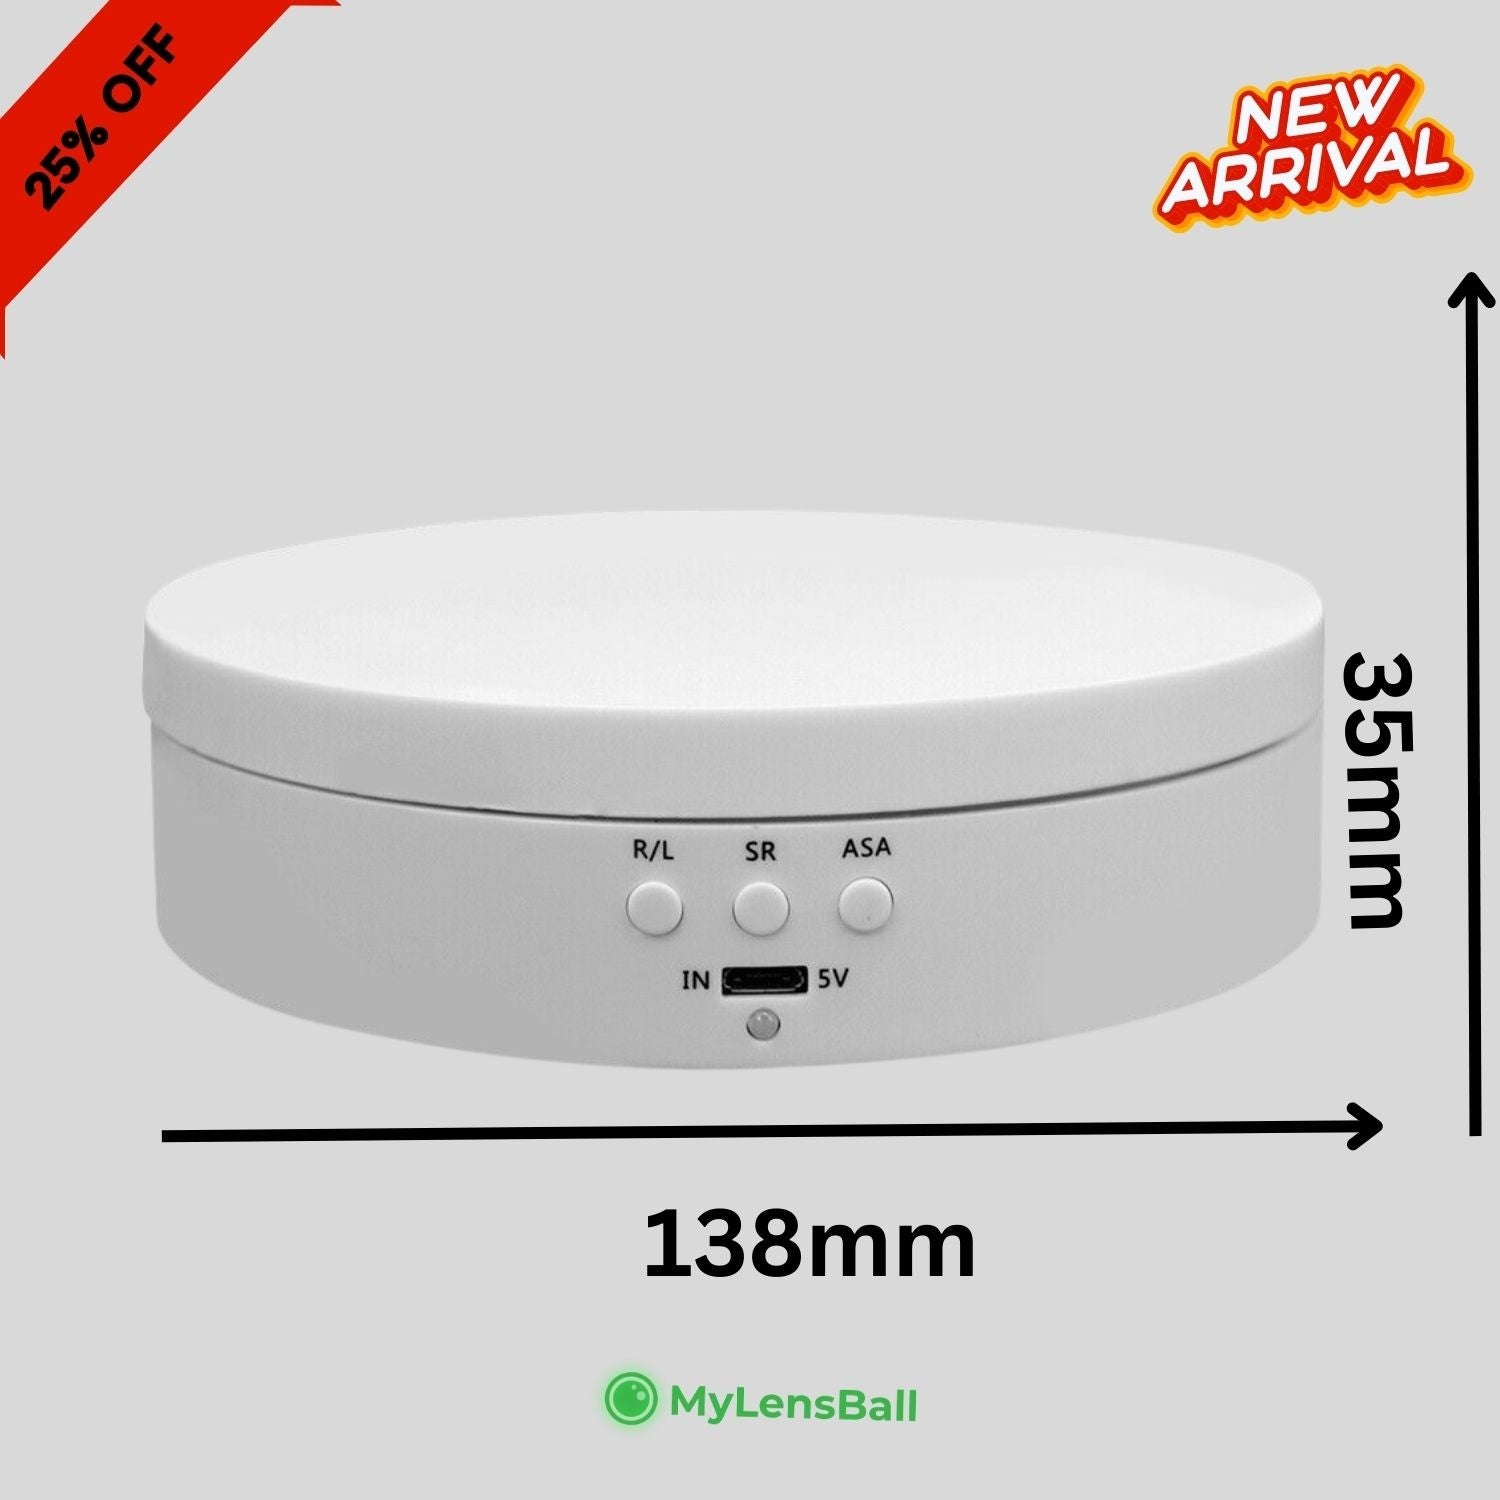 360° Rotating Display Table - mylensball.com.au